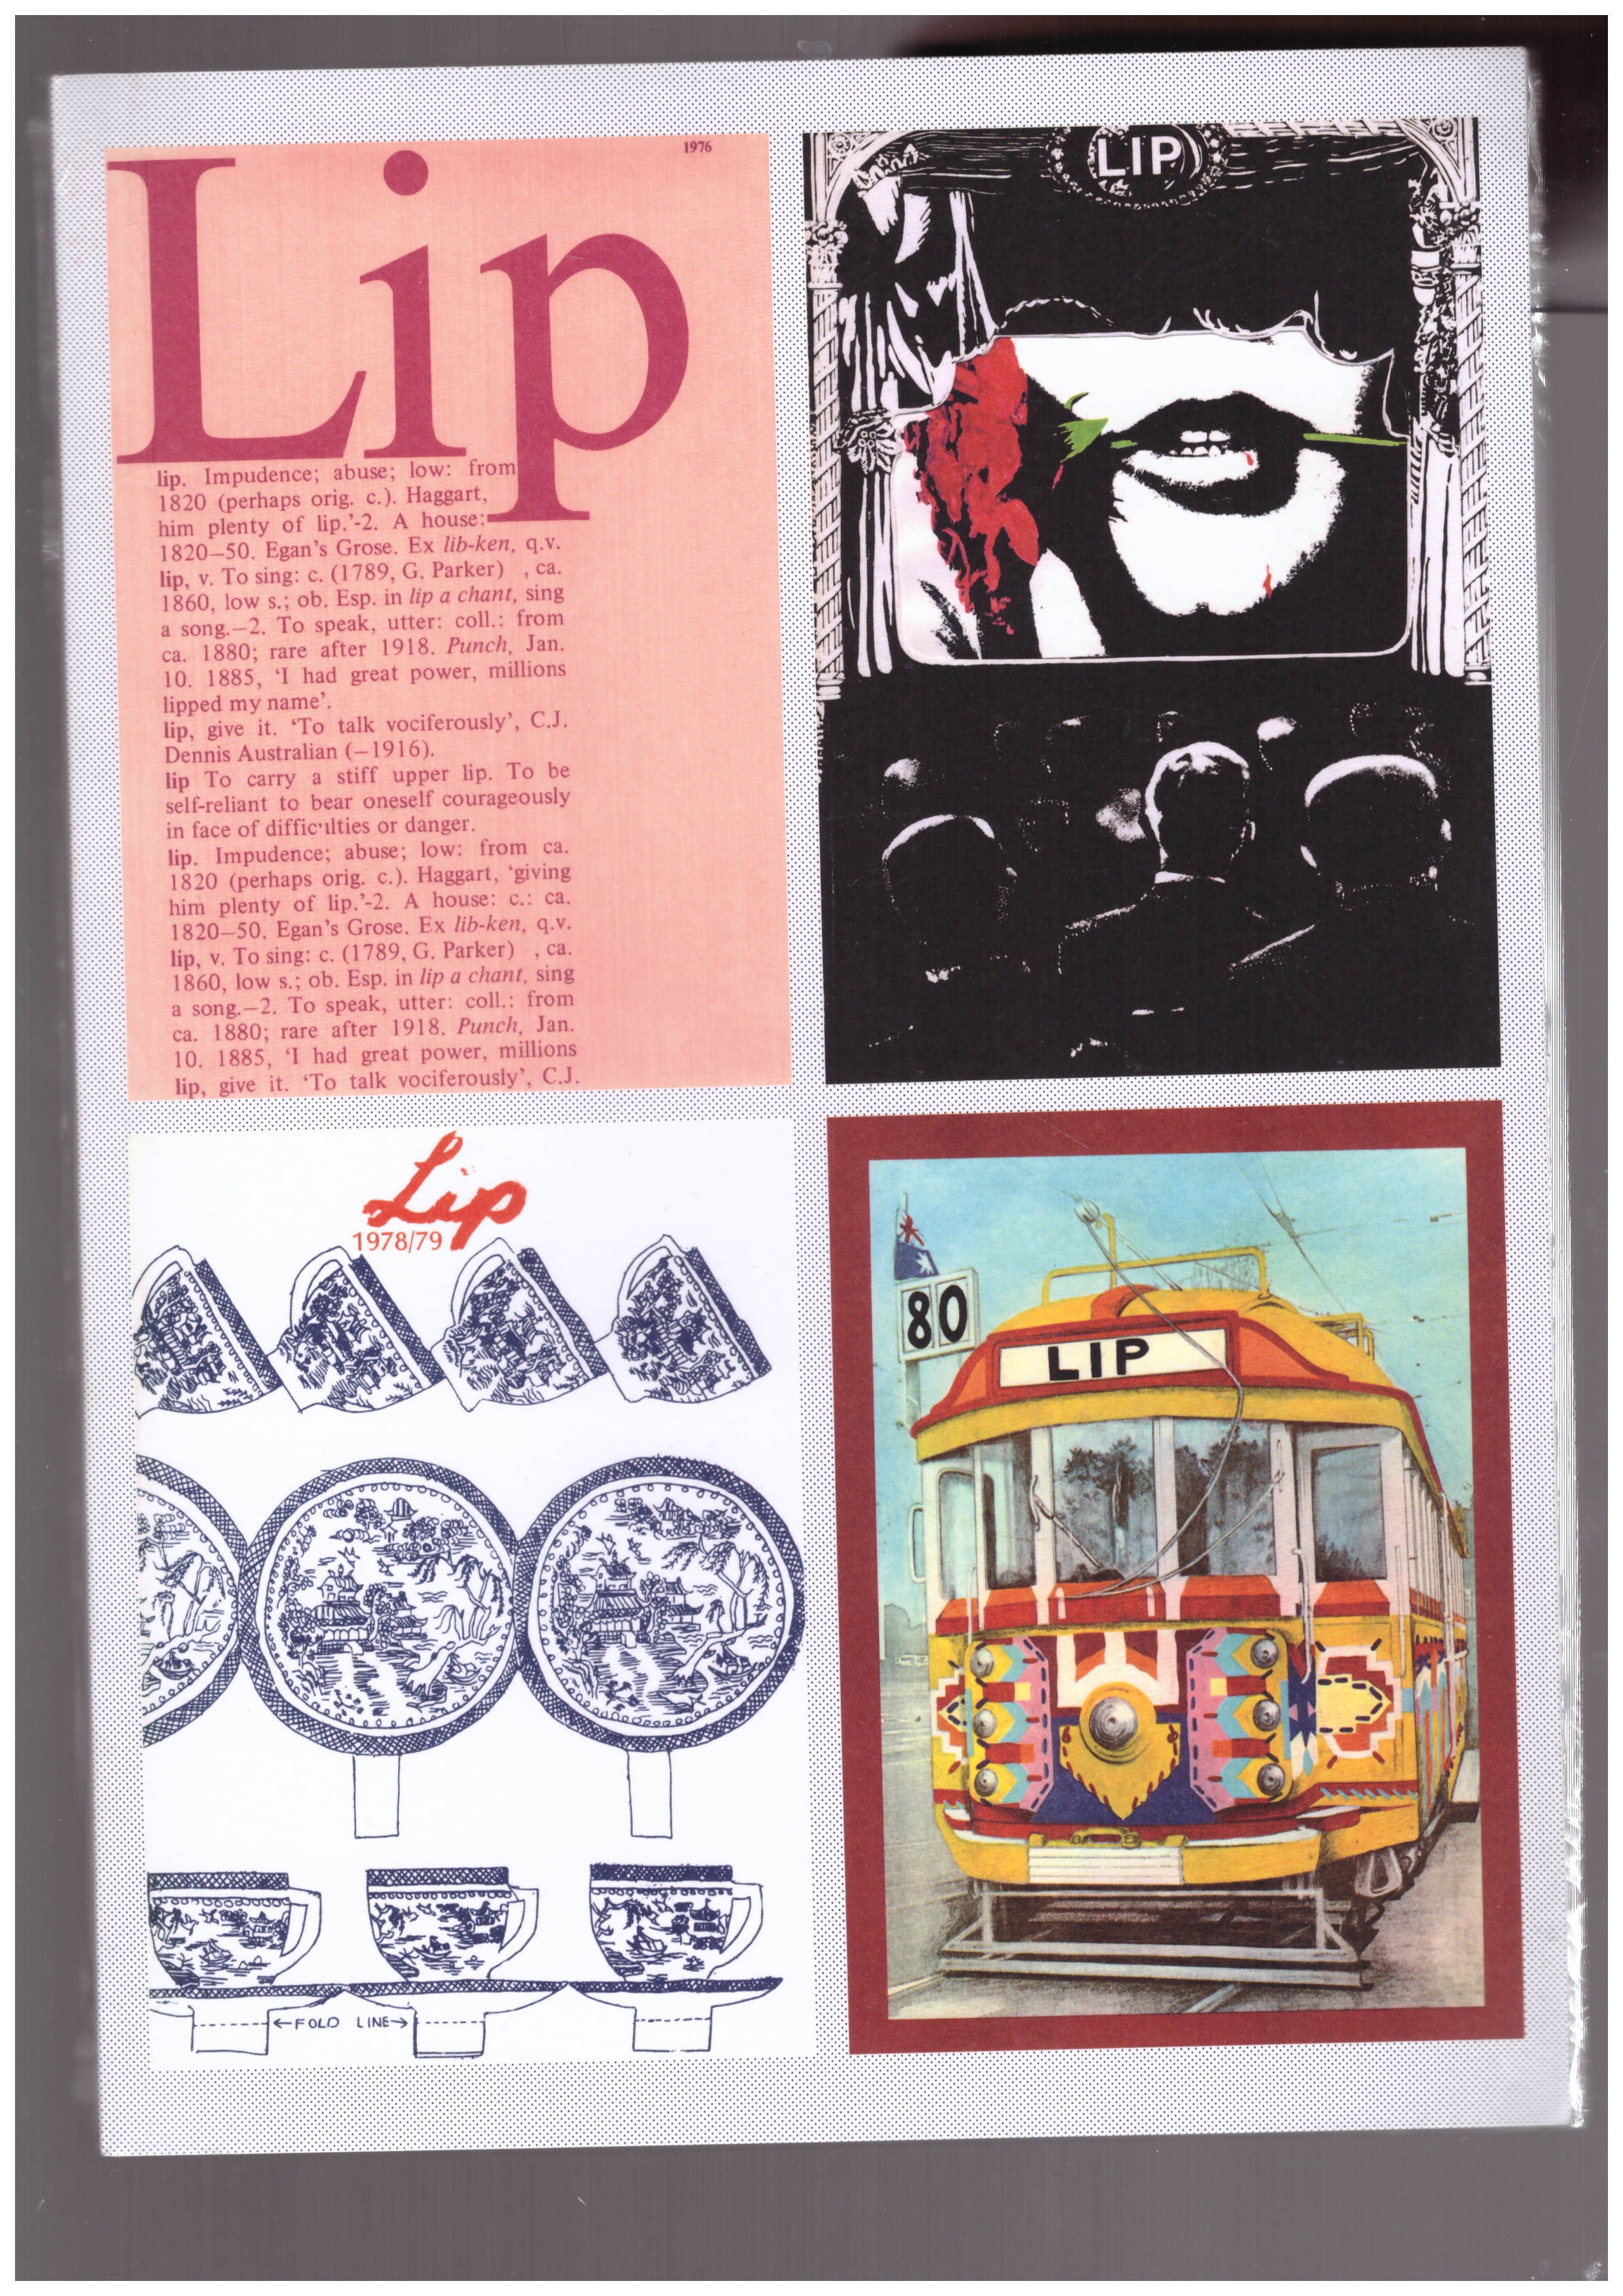 ZIHERL, Vivian (ed.) - The Lip Anthology: An Australian Feminist Arts Journal 1976–1984